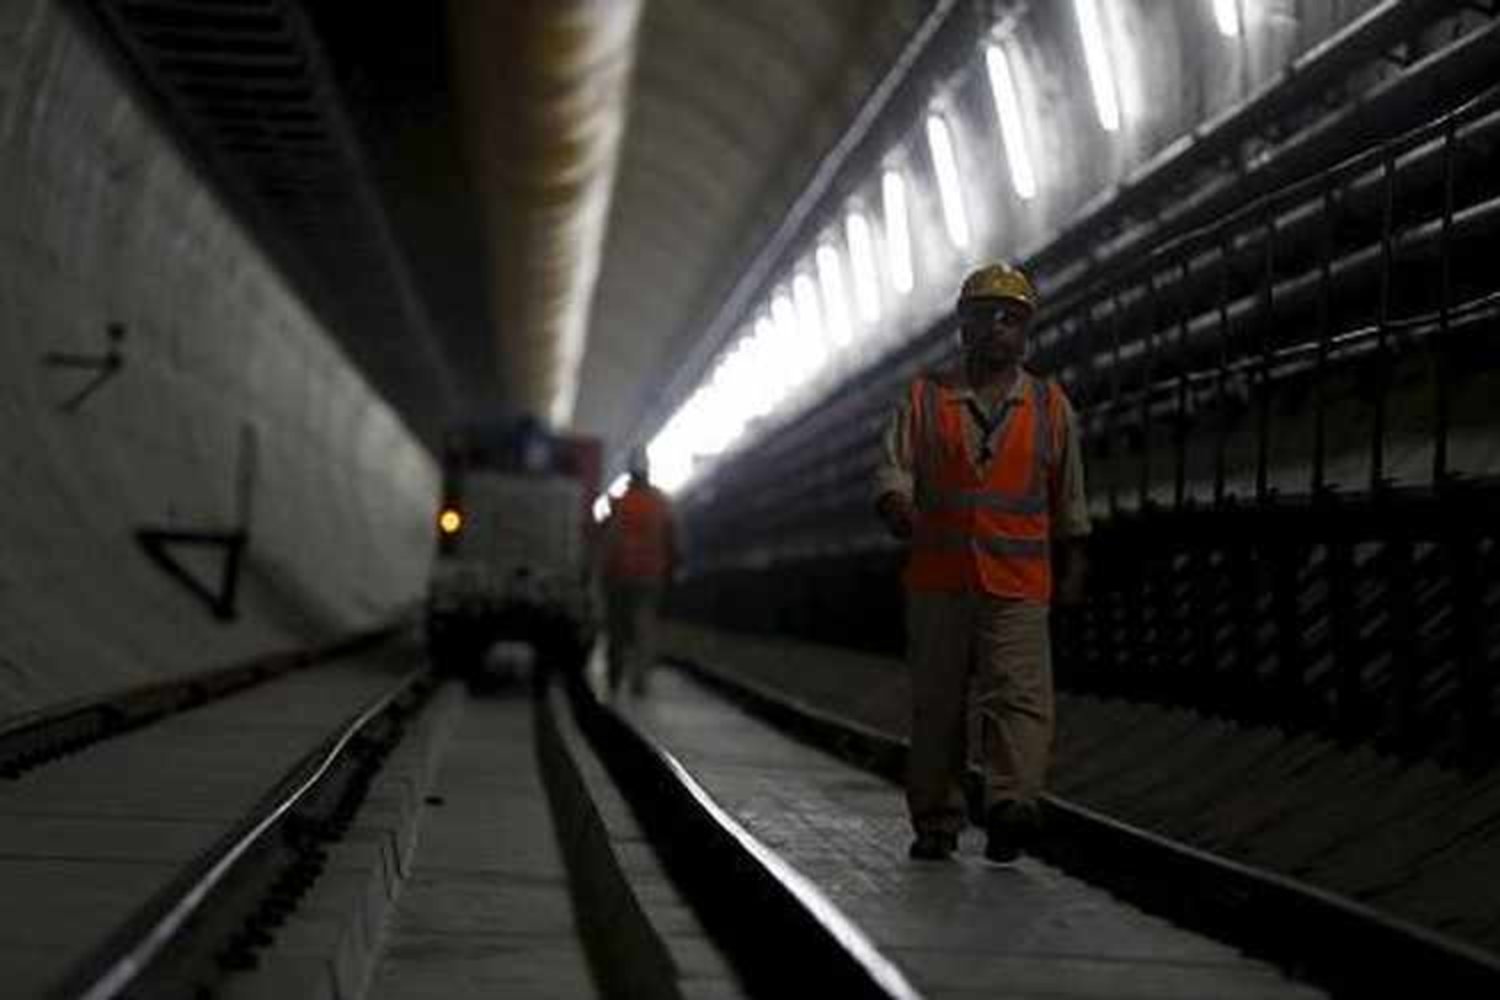 A worker walks at the site of the under-construction Riyadh Metro rail system in the Saudi capital Riyadh. REUTERS/Faisal Al Nasser